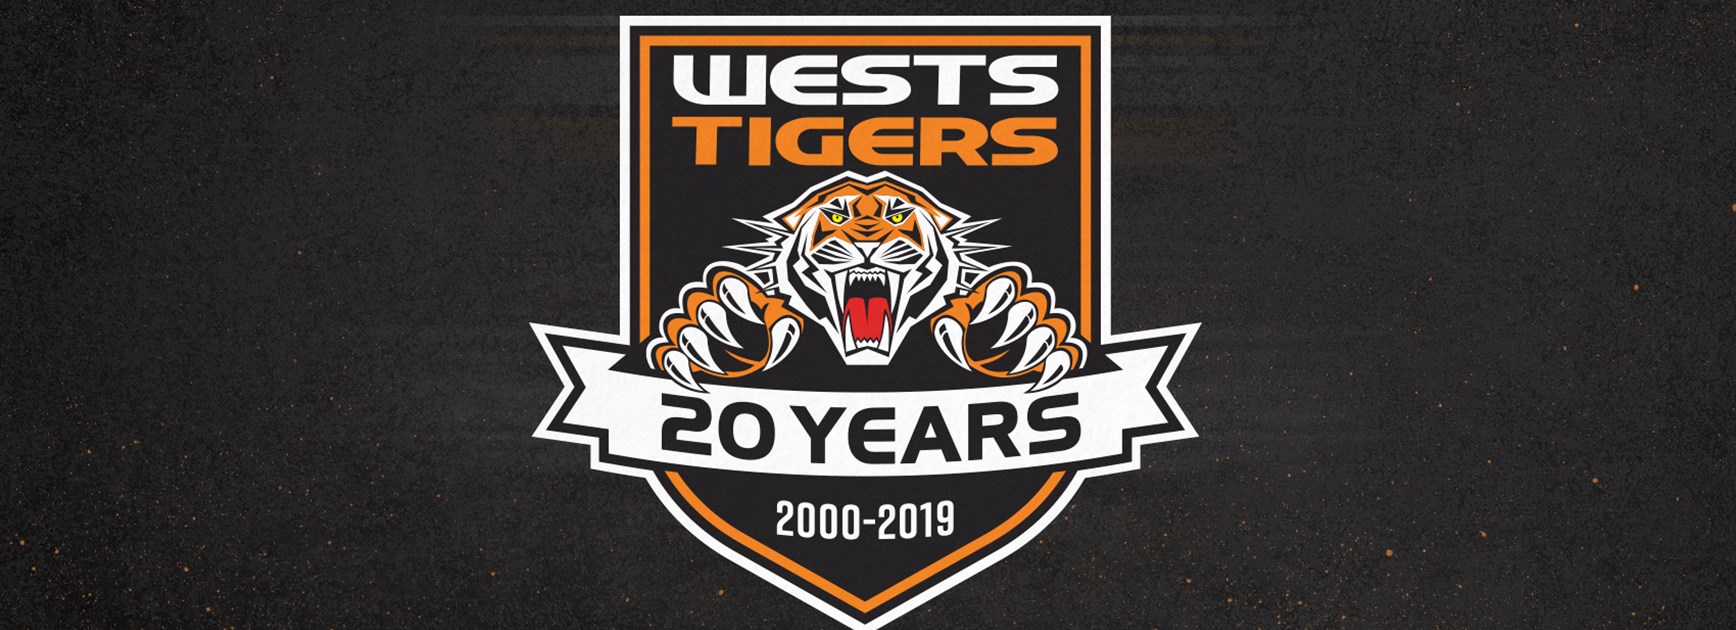 Wests Tigers Statement